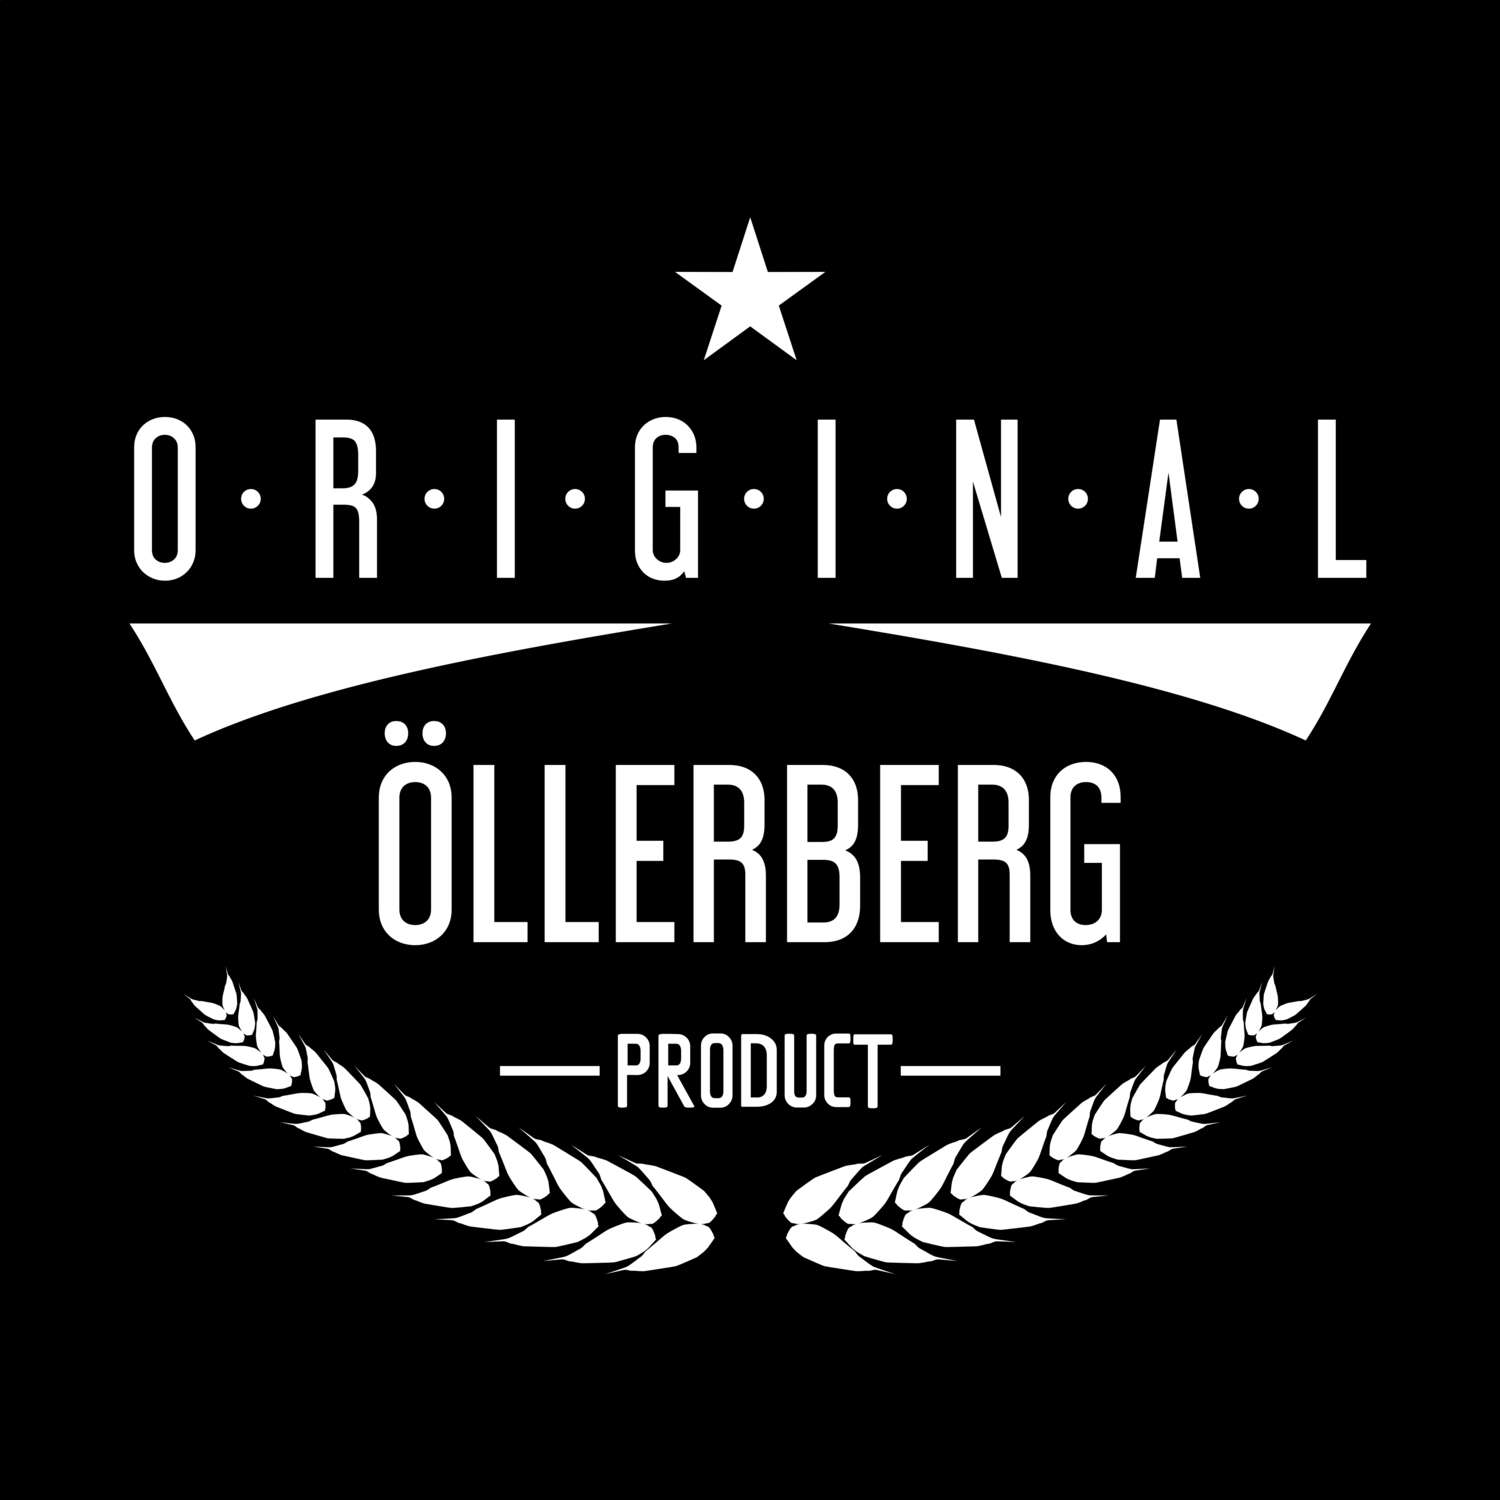 Öllerberg T-Shirt »Original Product«